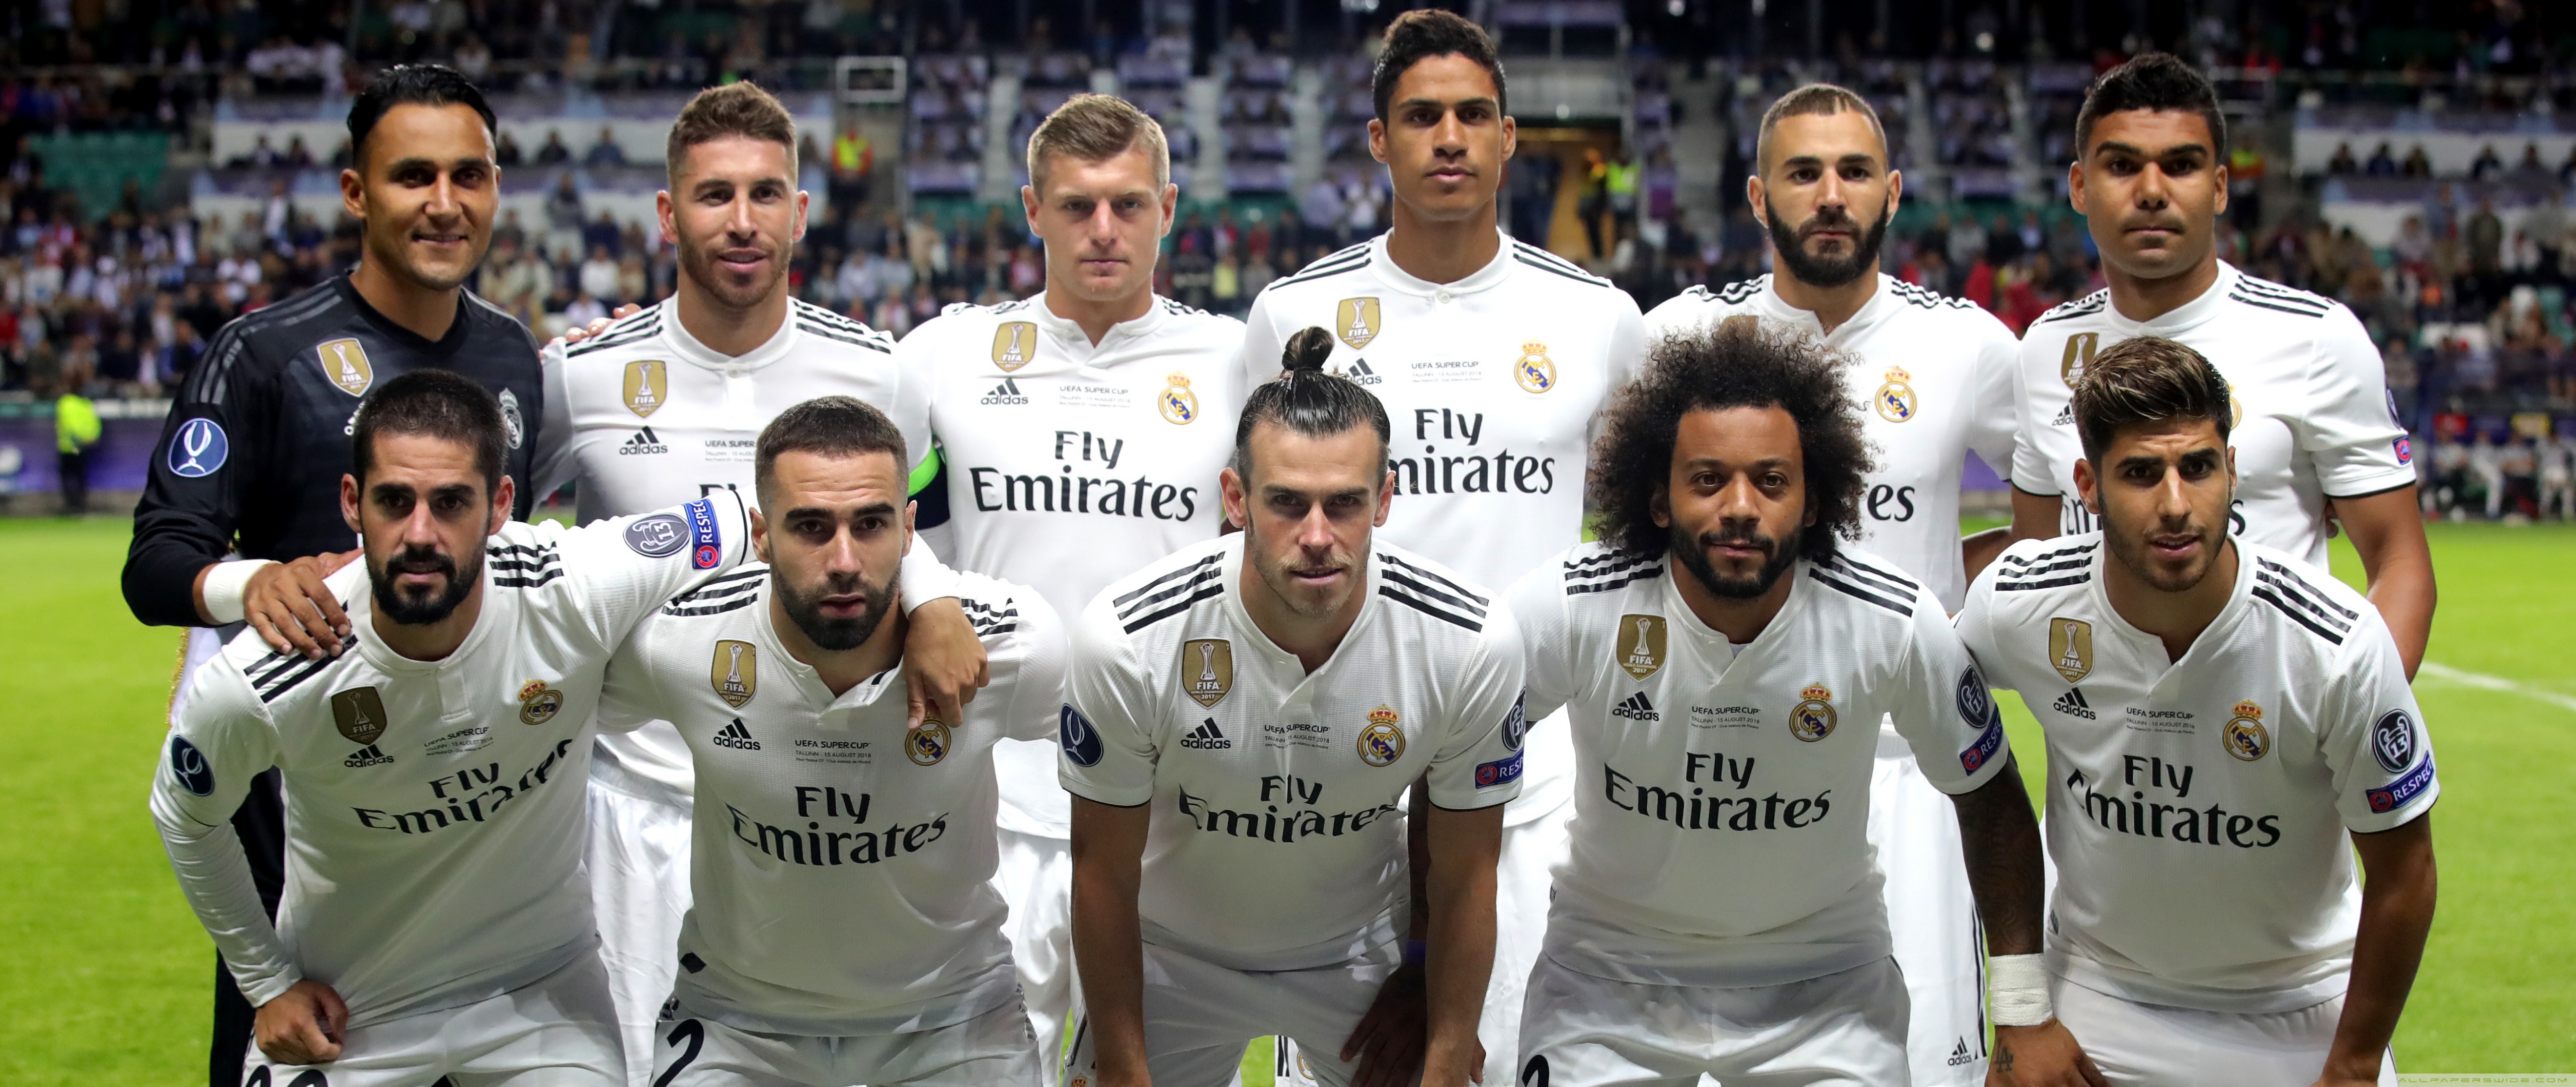 Casemiro Real Madrid 2018 , HD Wallpaper & Backgrounds